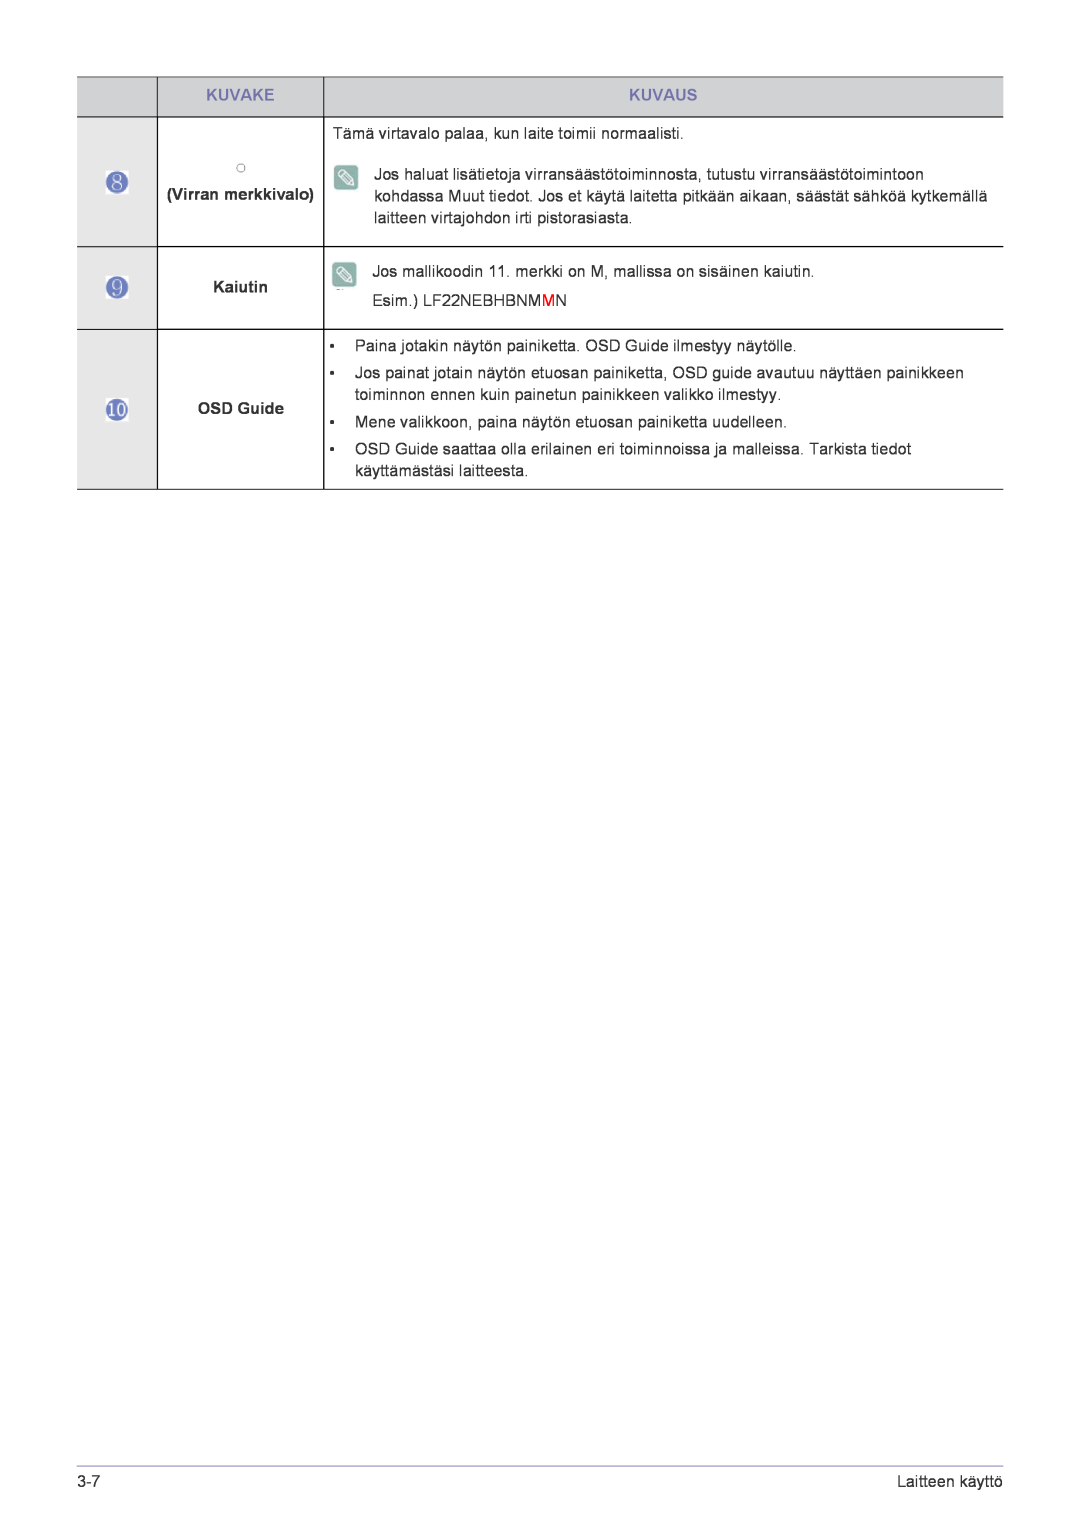 Samsung LF22NPBHBNP/EN manual Kuvake, Kuvaus, Virran merkkivalo, Kaiutin, OSD Guide 